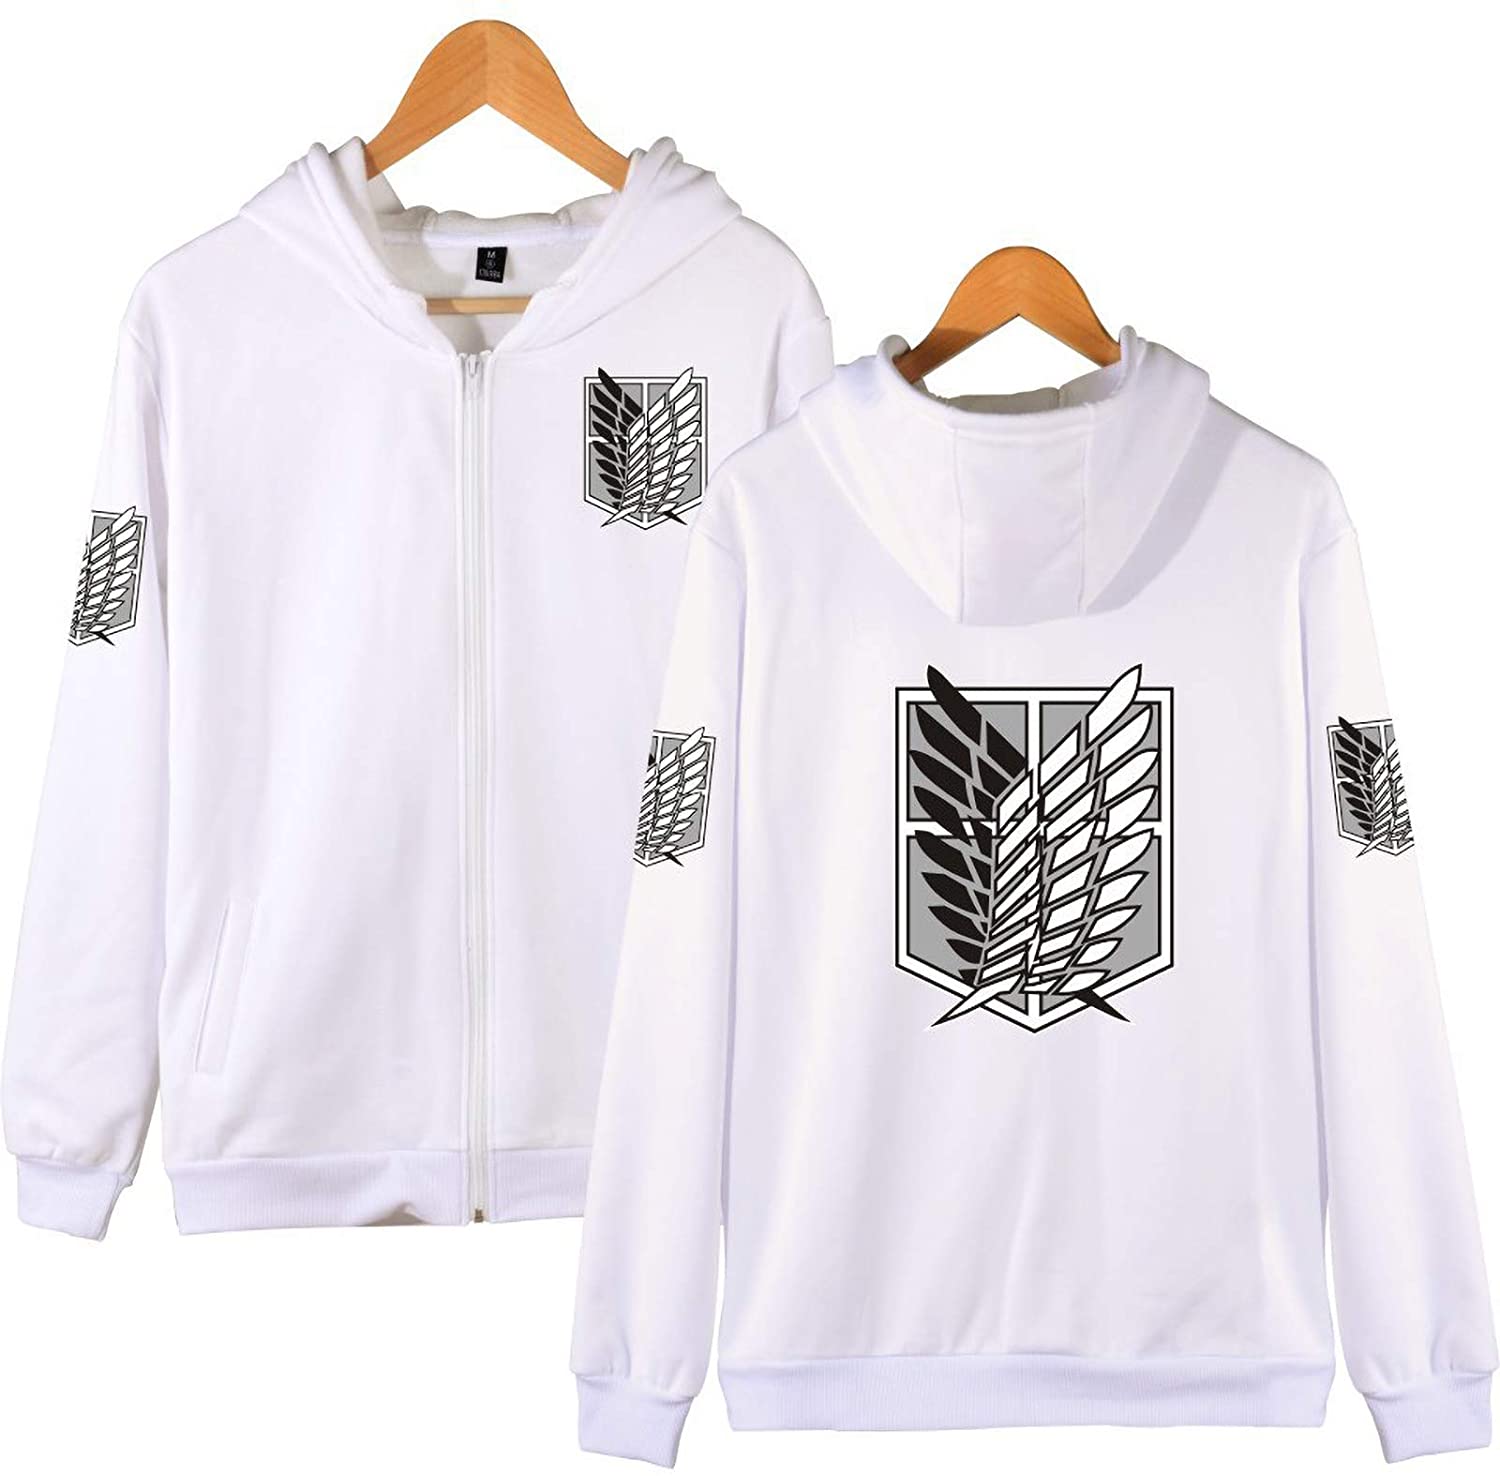 Anime Attack on Titan Hoodie - Unisex Pullover Hoodie Casual Fashion 3D Printing Sweatshirt